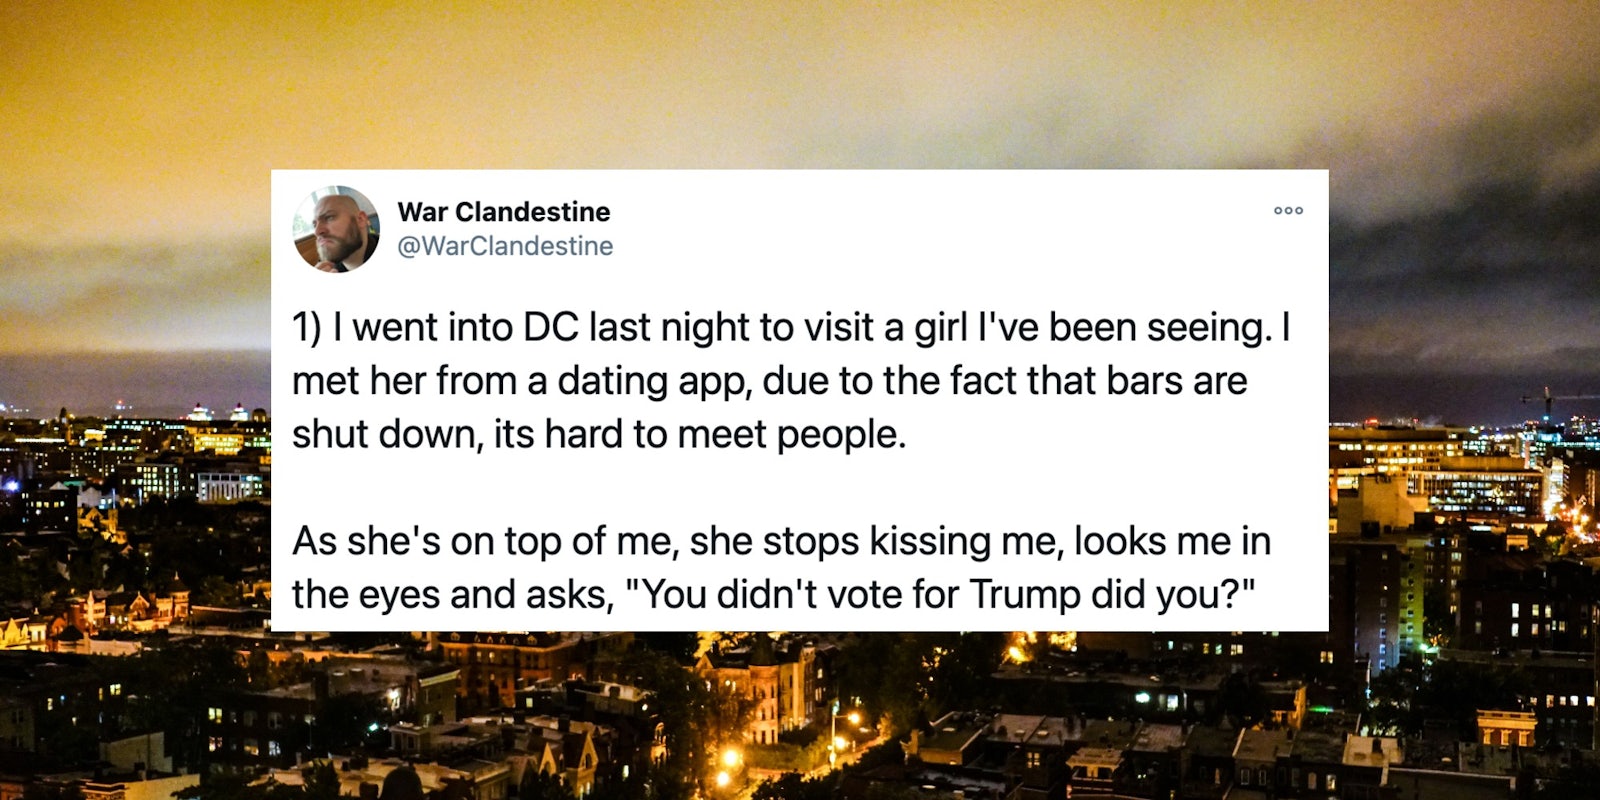 A tweet over an image of Washington D.C. at night